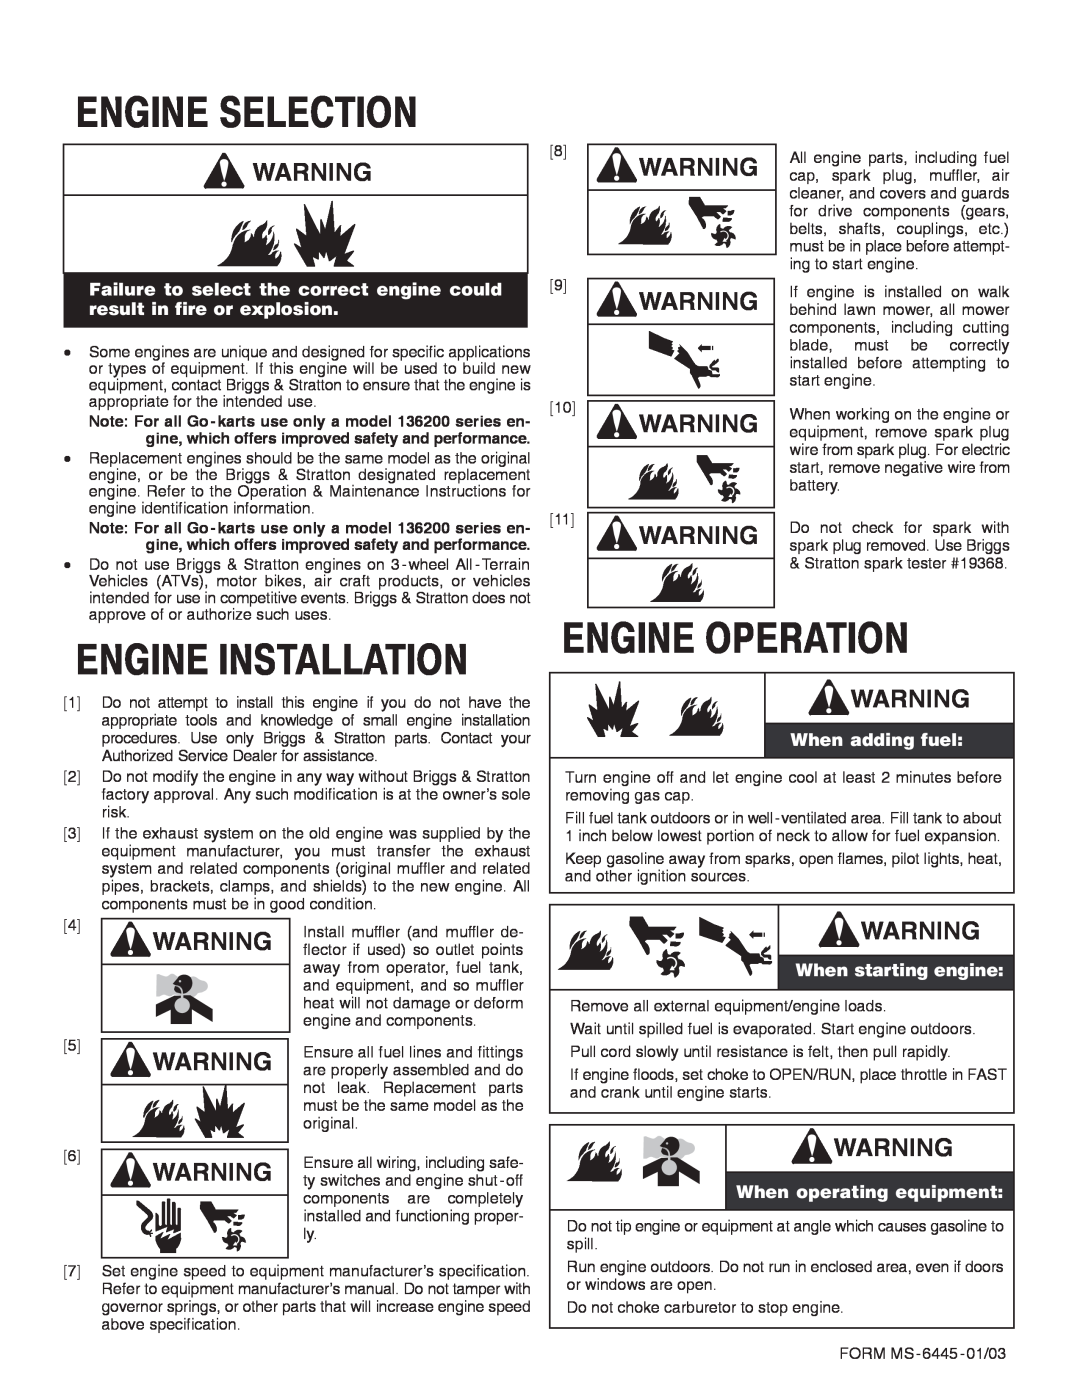 Briggs & Stratton 42E700 Engine Selection, Engine Installation, Engine Operation, When adding fuel, When starting engine 